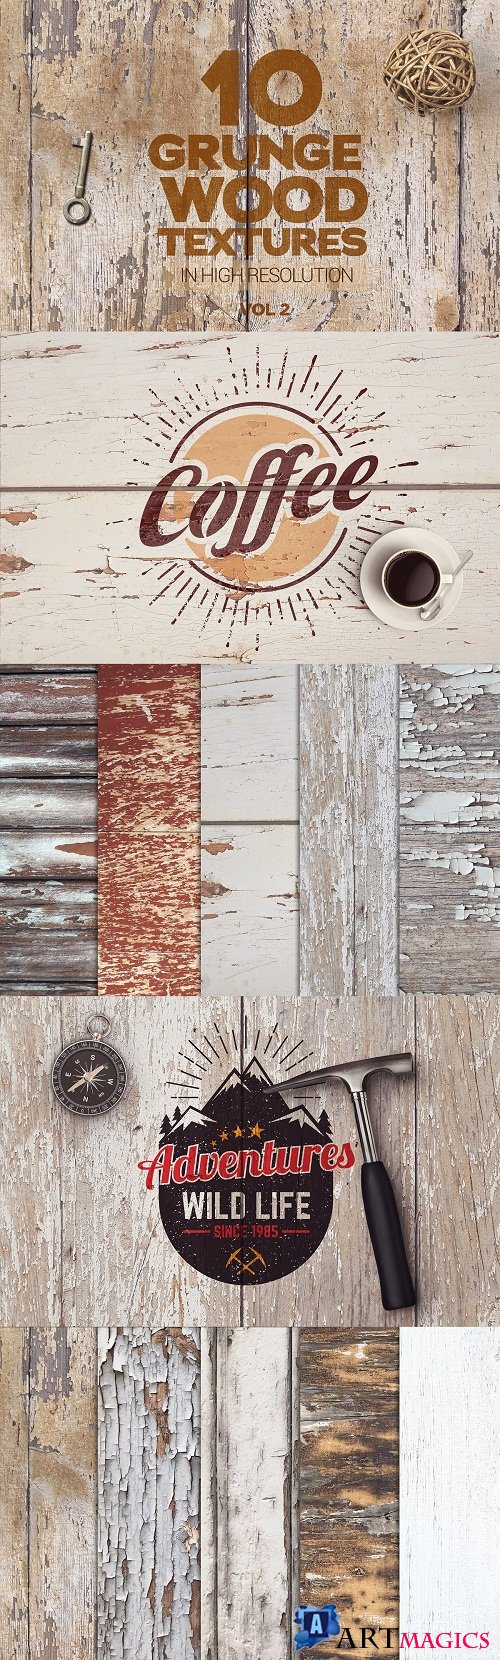 Grunge Wood Textures x10 vol2 - 3775156